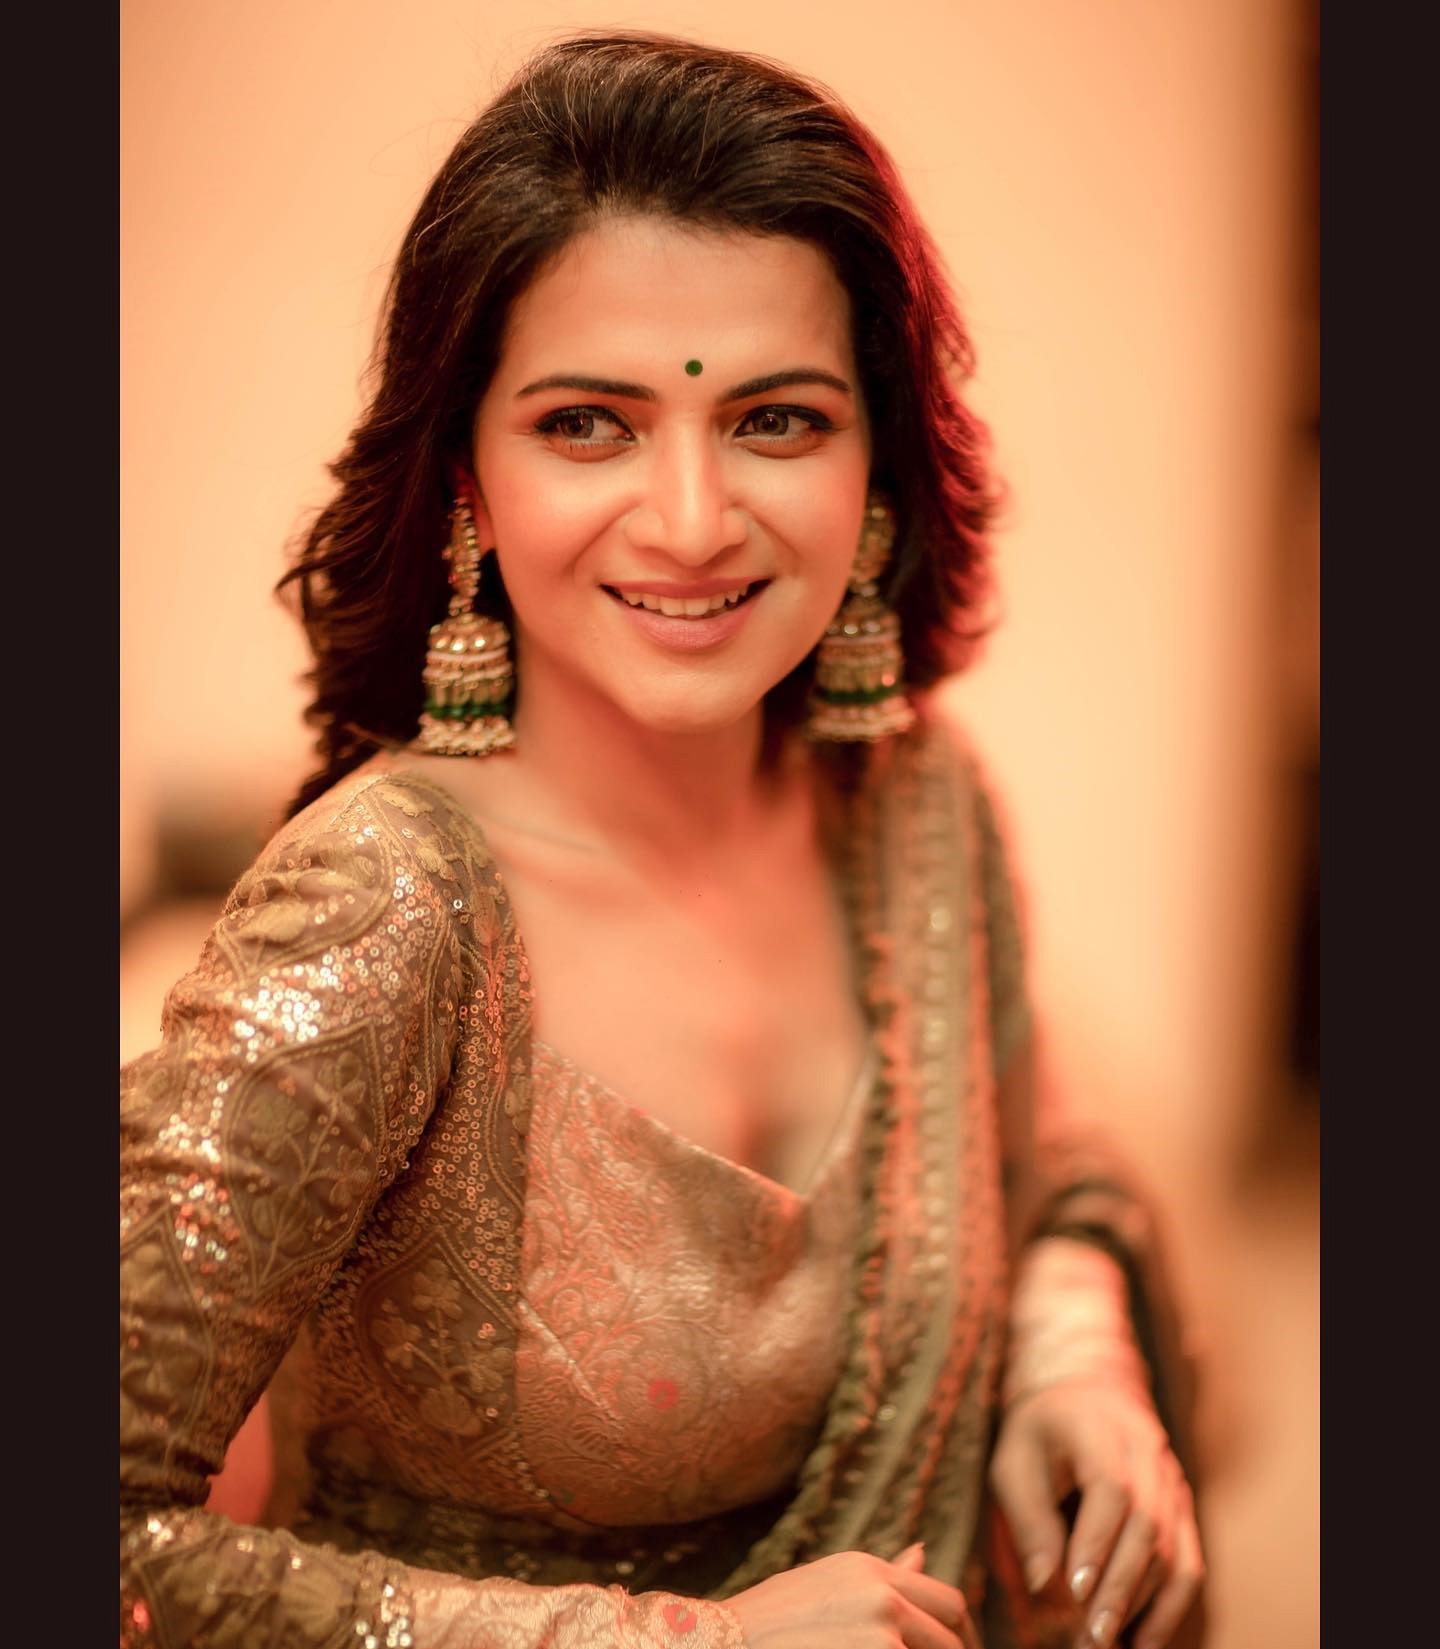 Vijay Tv Divyadharshni Sex - Is this famous Vijay TV actress planning to remarry? - Buzz - Tamil News -  IndiaGlitz.com